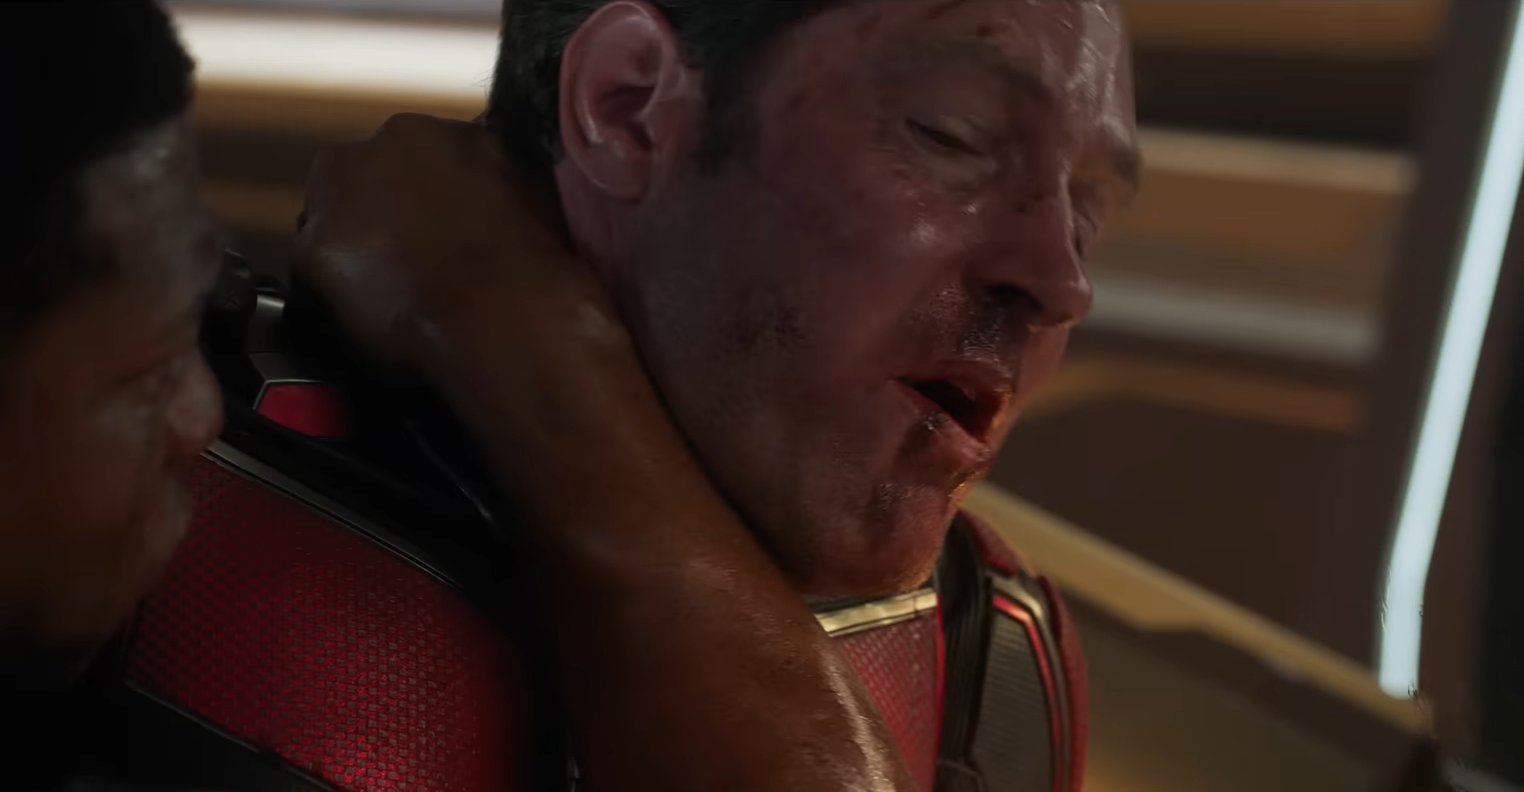 Homem-Formiga 3 apodrece no Rotten Tomatoes com 58% - Entretenimento - eplay